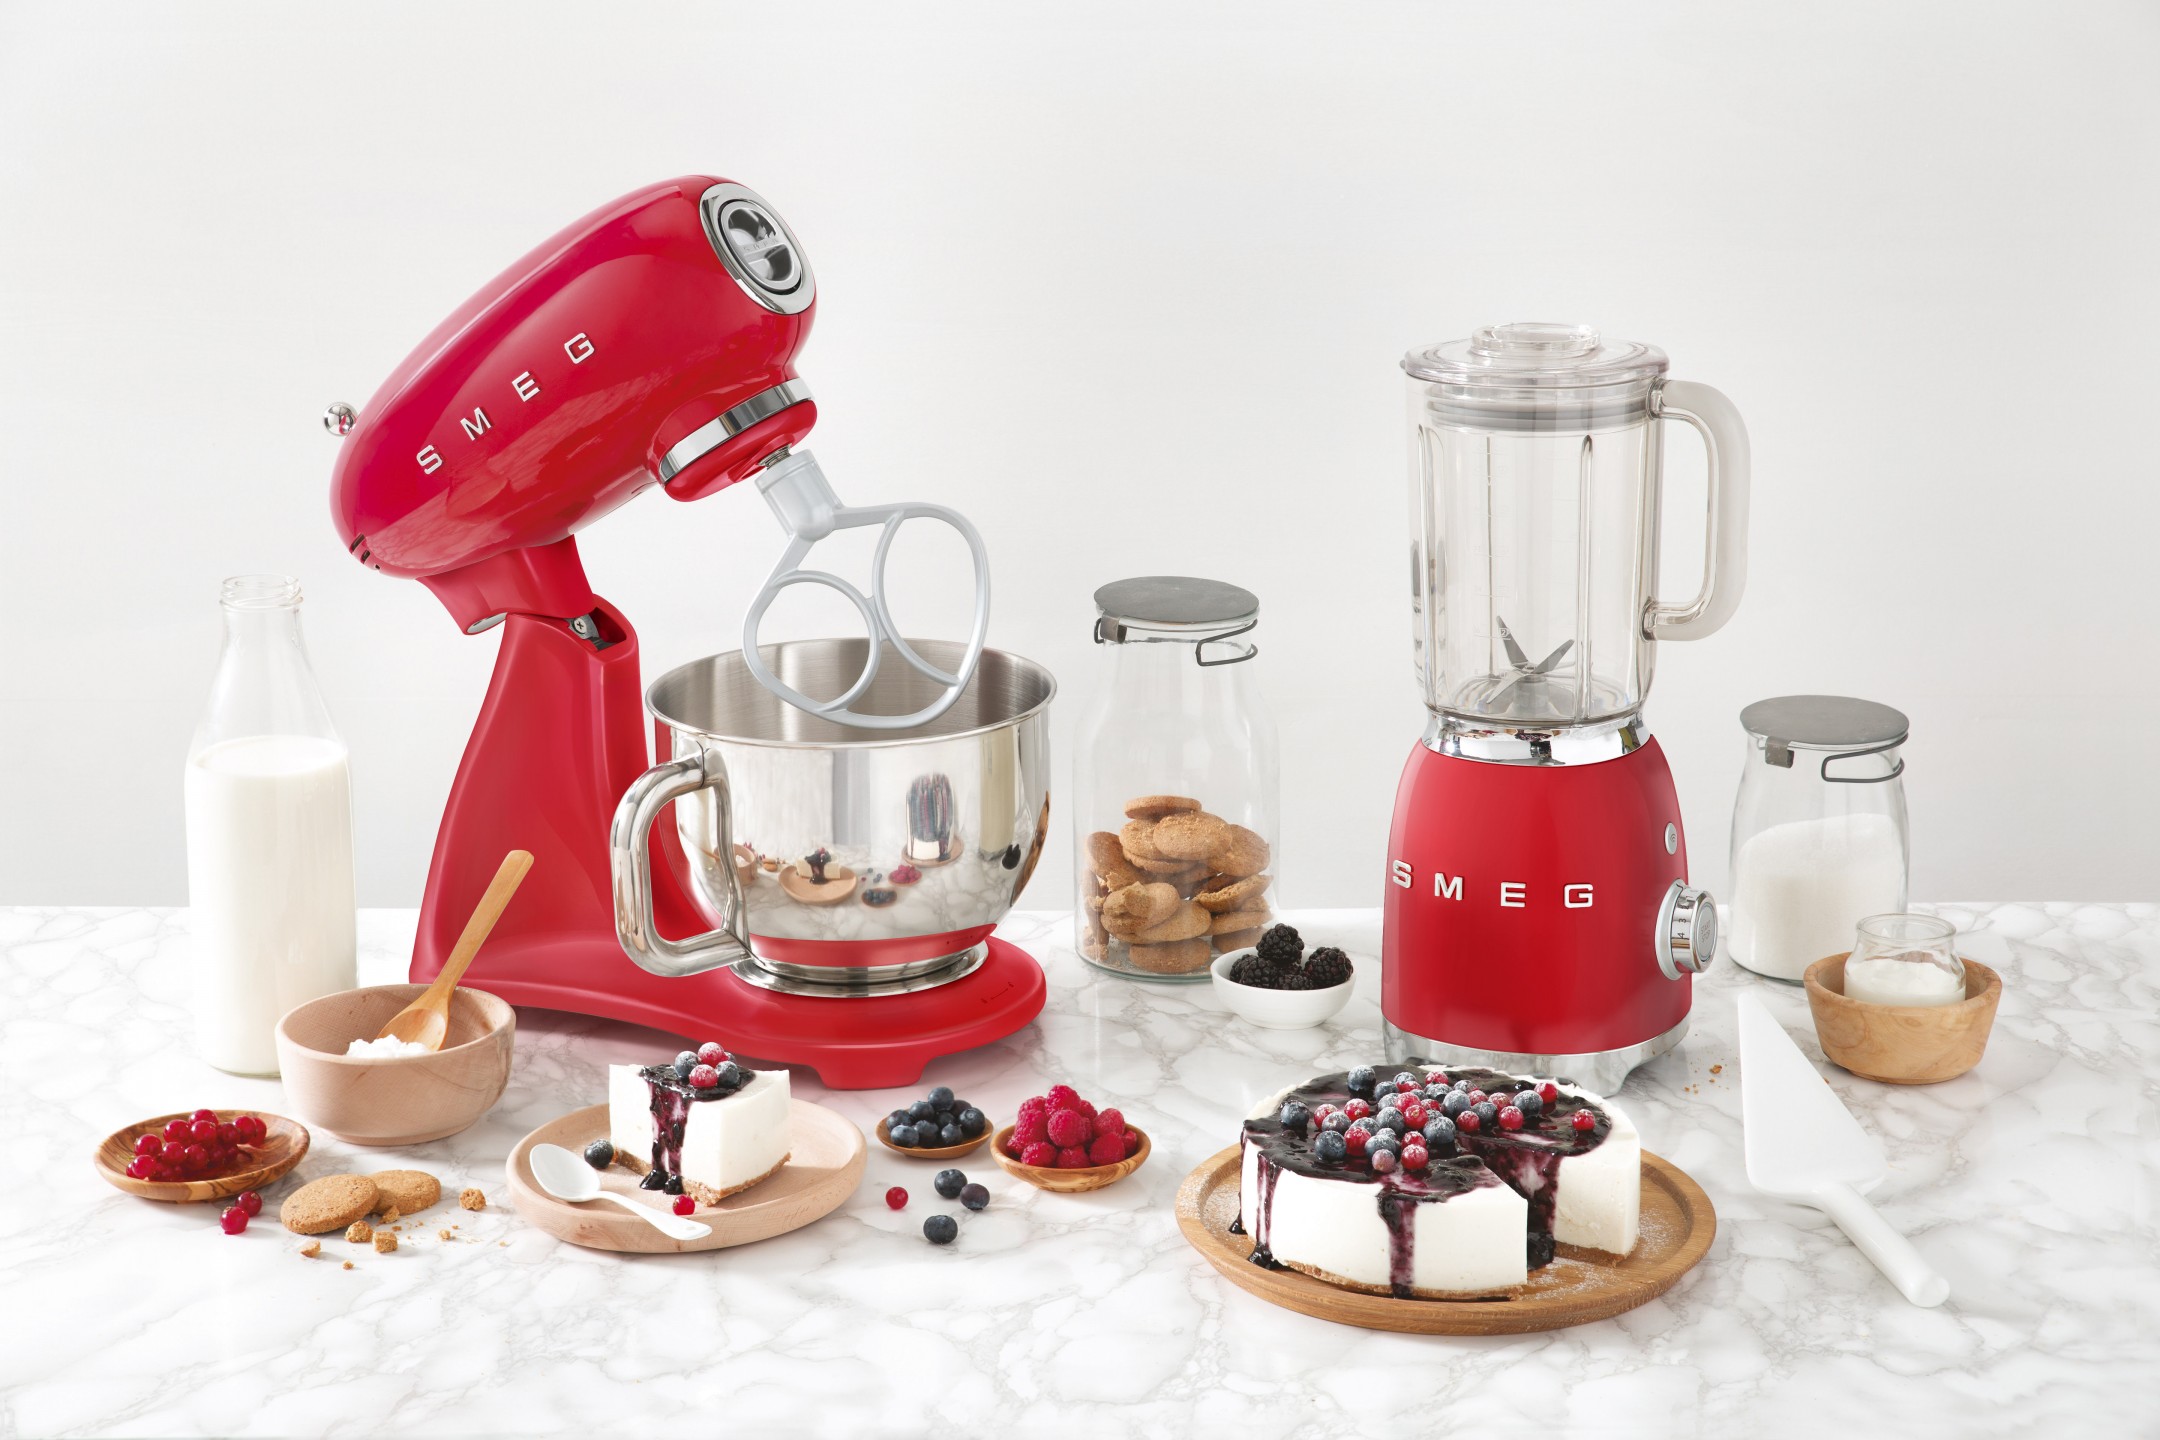 squarerooms smeg blender stand mixer red kitchen appliances lifestyle